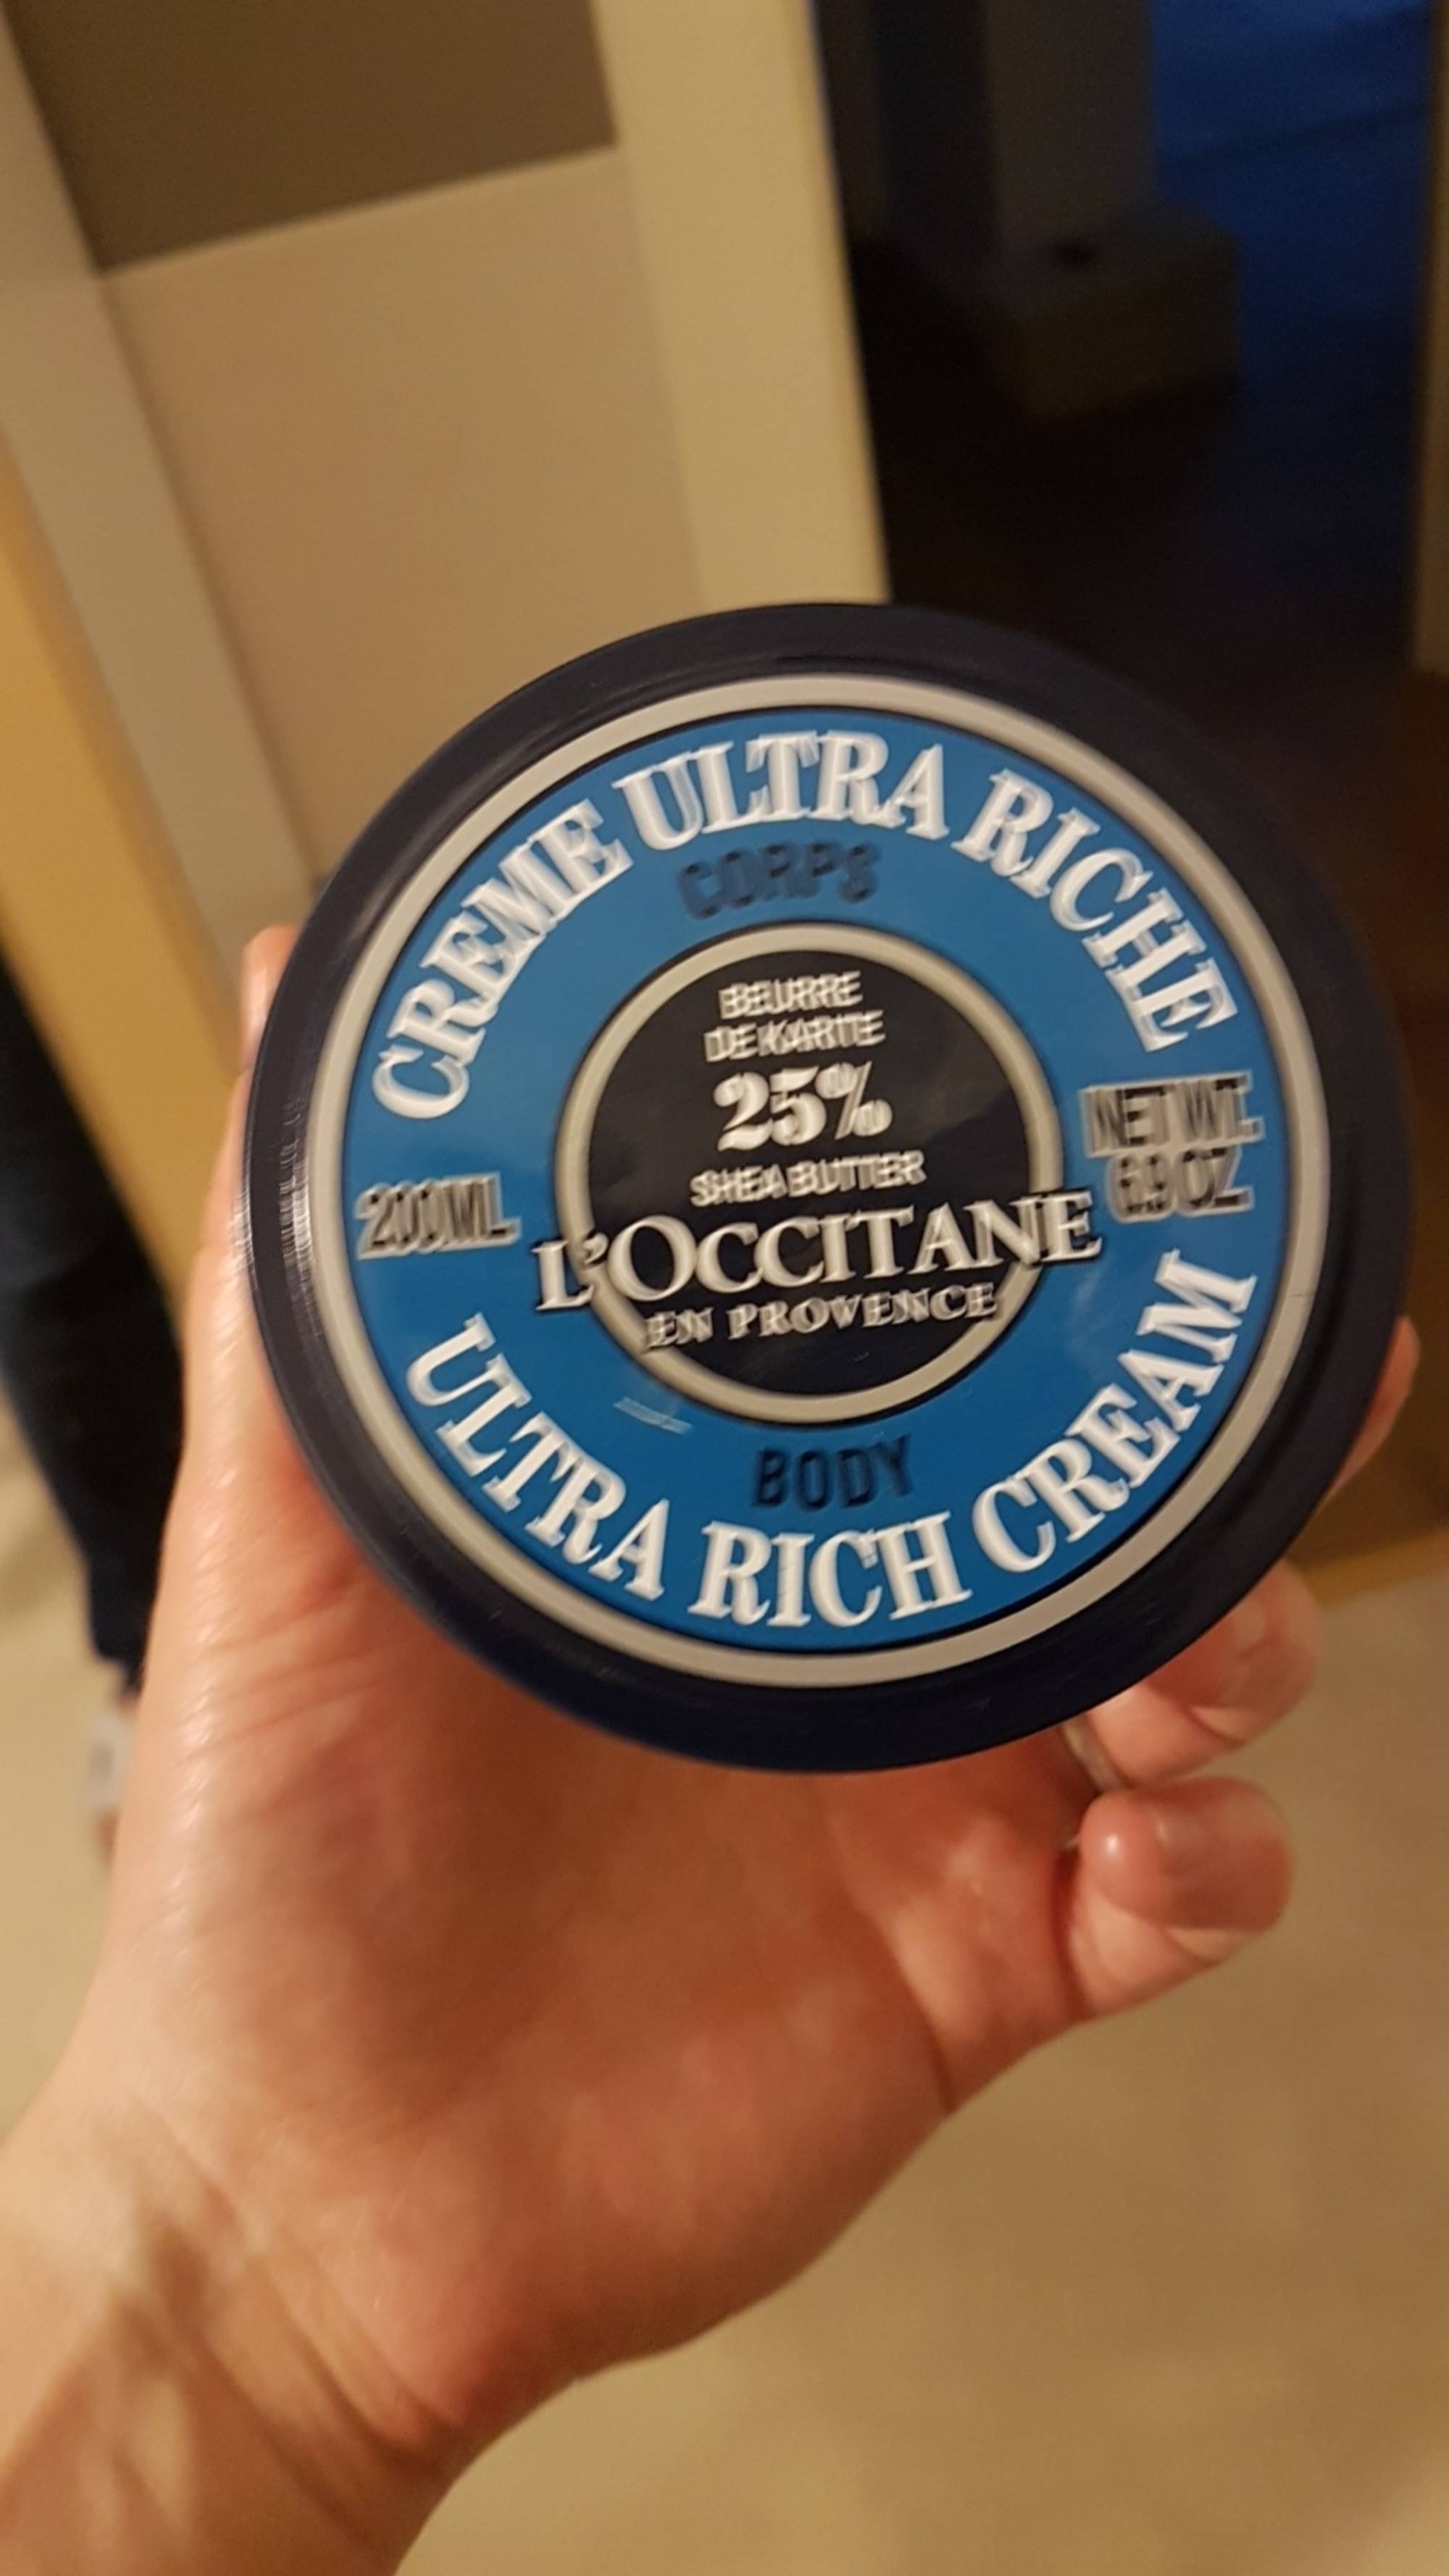 L'OCCITANE - Karité - Crème ultra riche corps